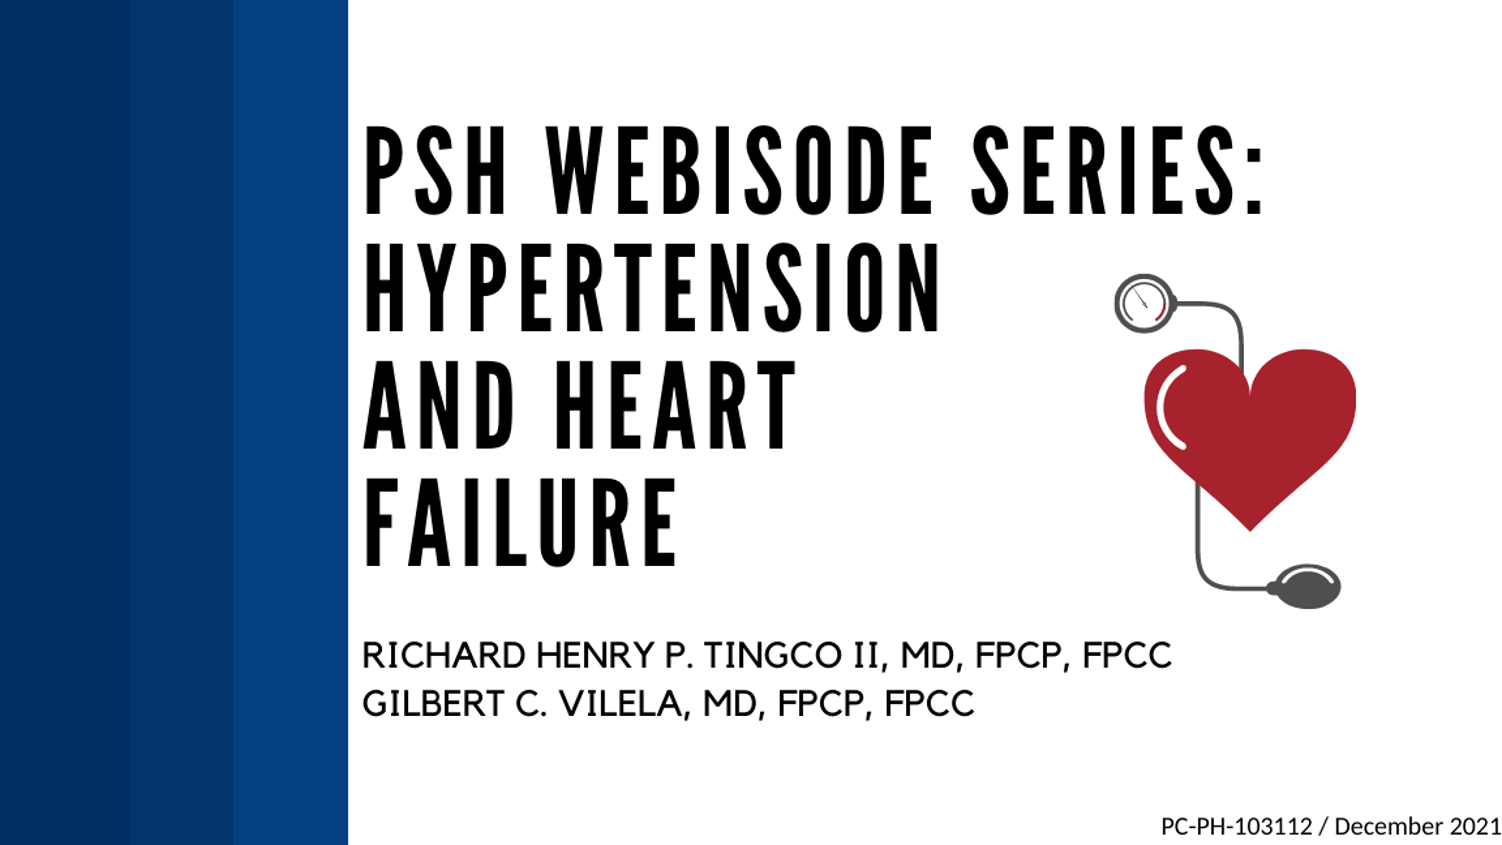 PSH Webisode Series: Hypertension and Heart Failure